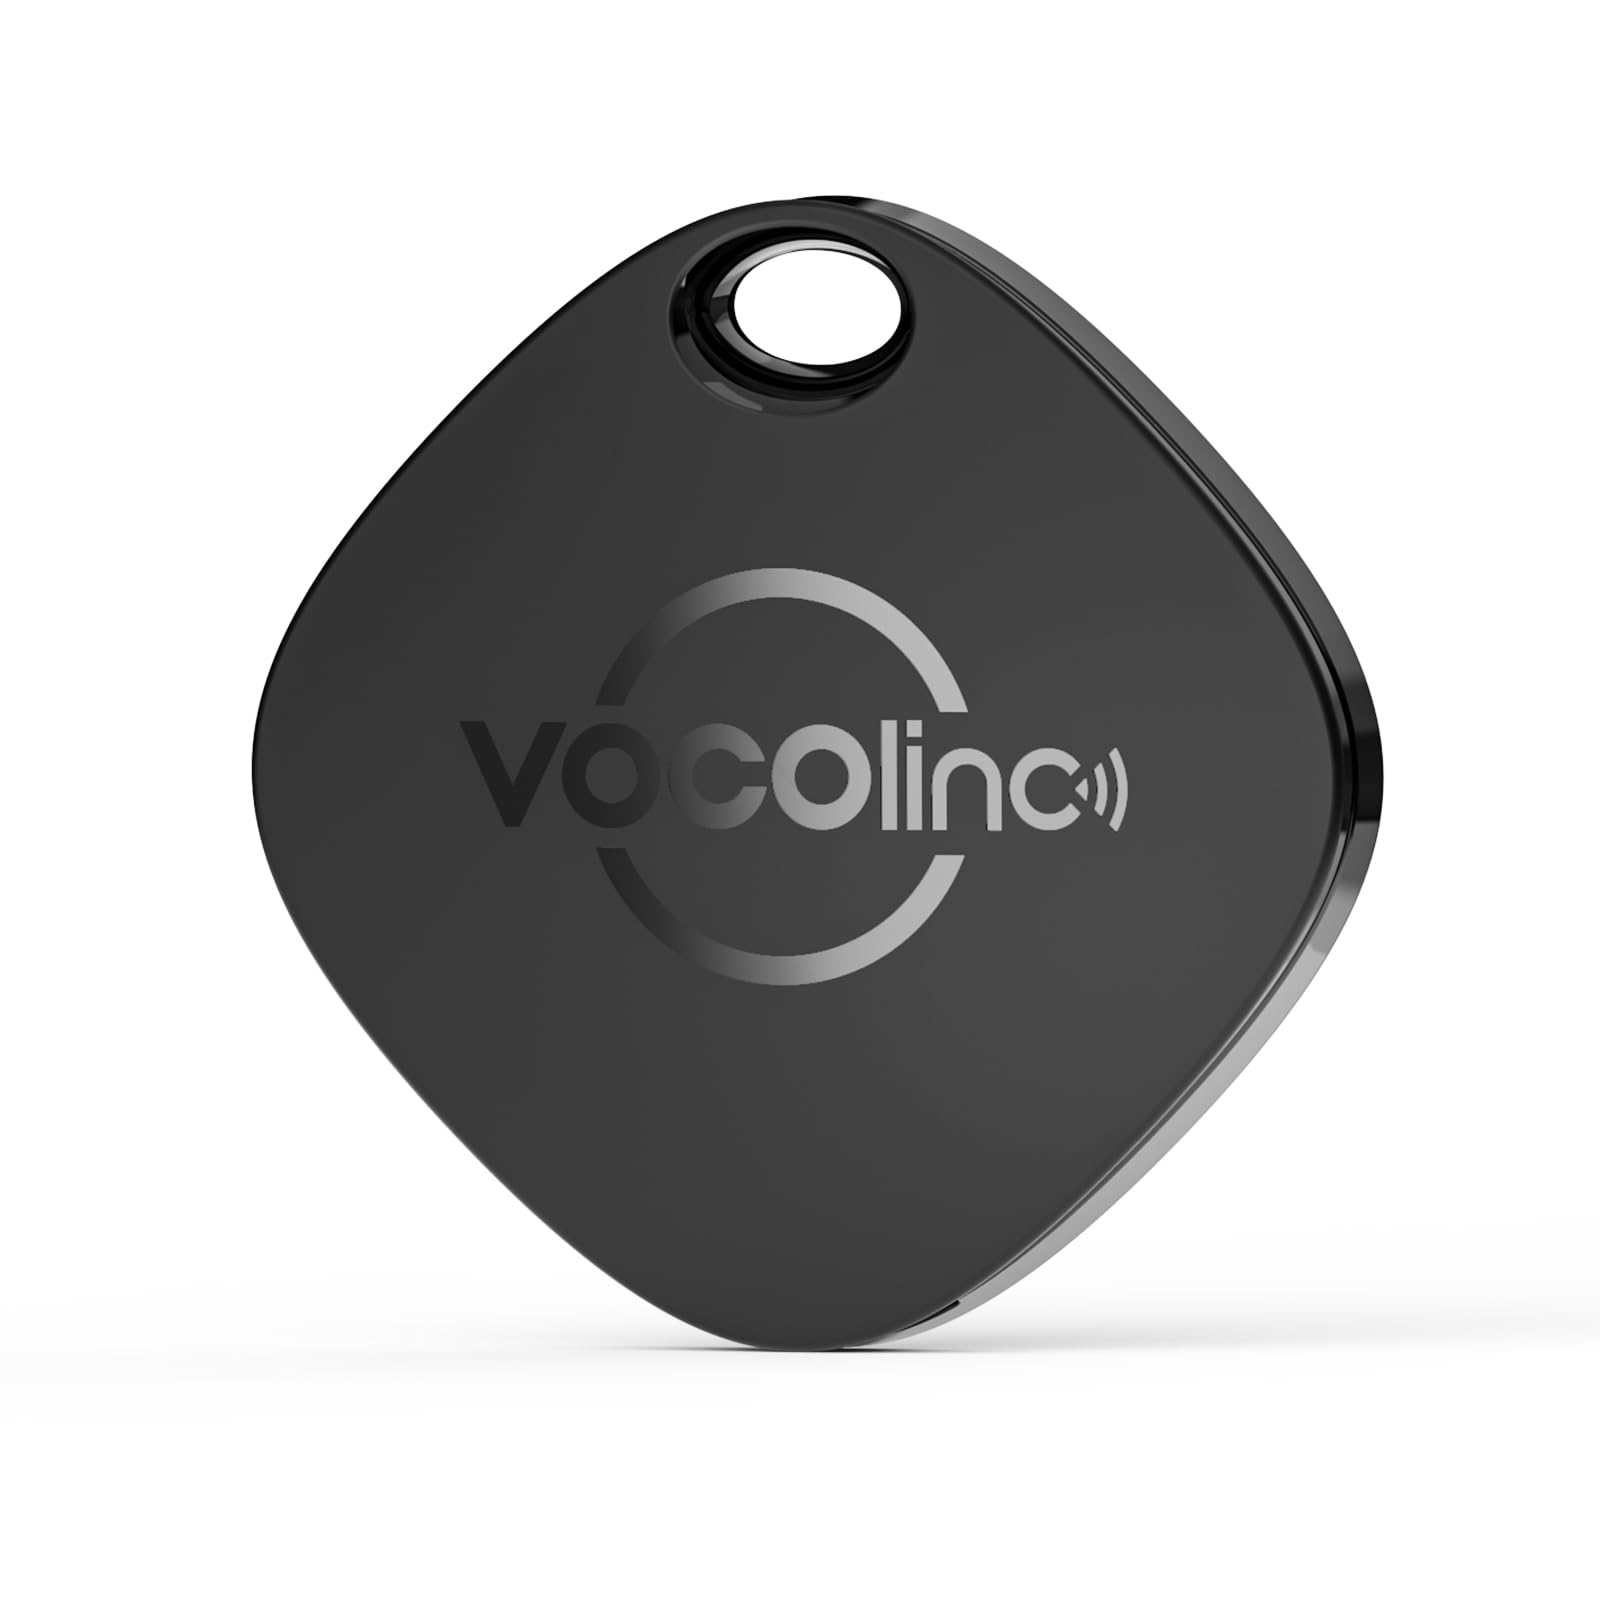 VOCOlinc Key Finder エアタグ 紛失防止タグ Appleの「探す」 (iOSのみ対応), 忘れ物防止 タグ 超薄(0.75 cm) スマートタグ Bluetooth トラッカー 探し物（鍵、荷物用） 電池交換可能 軽量 黒 1 個入り